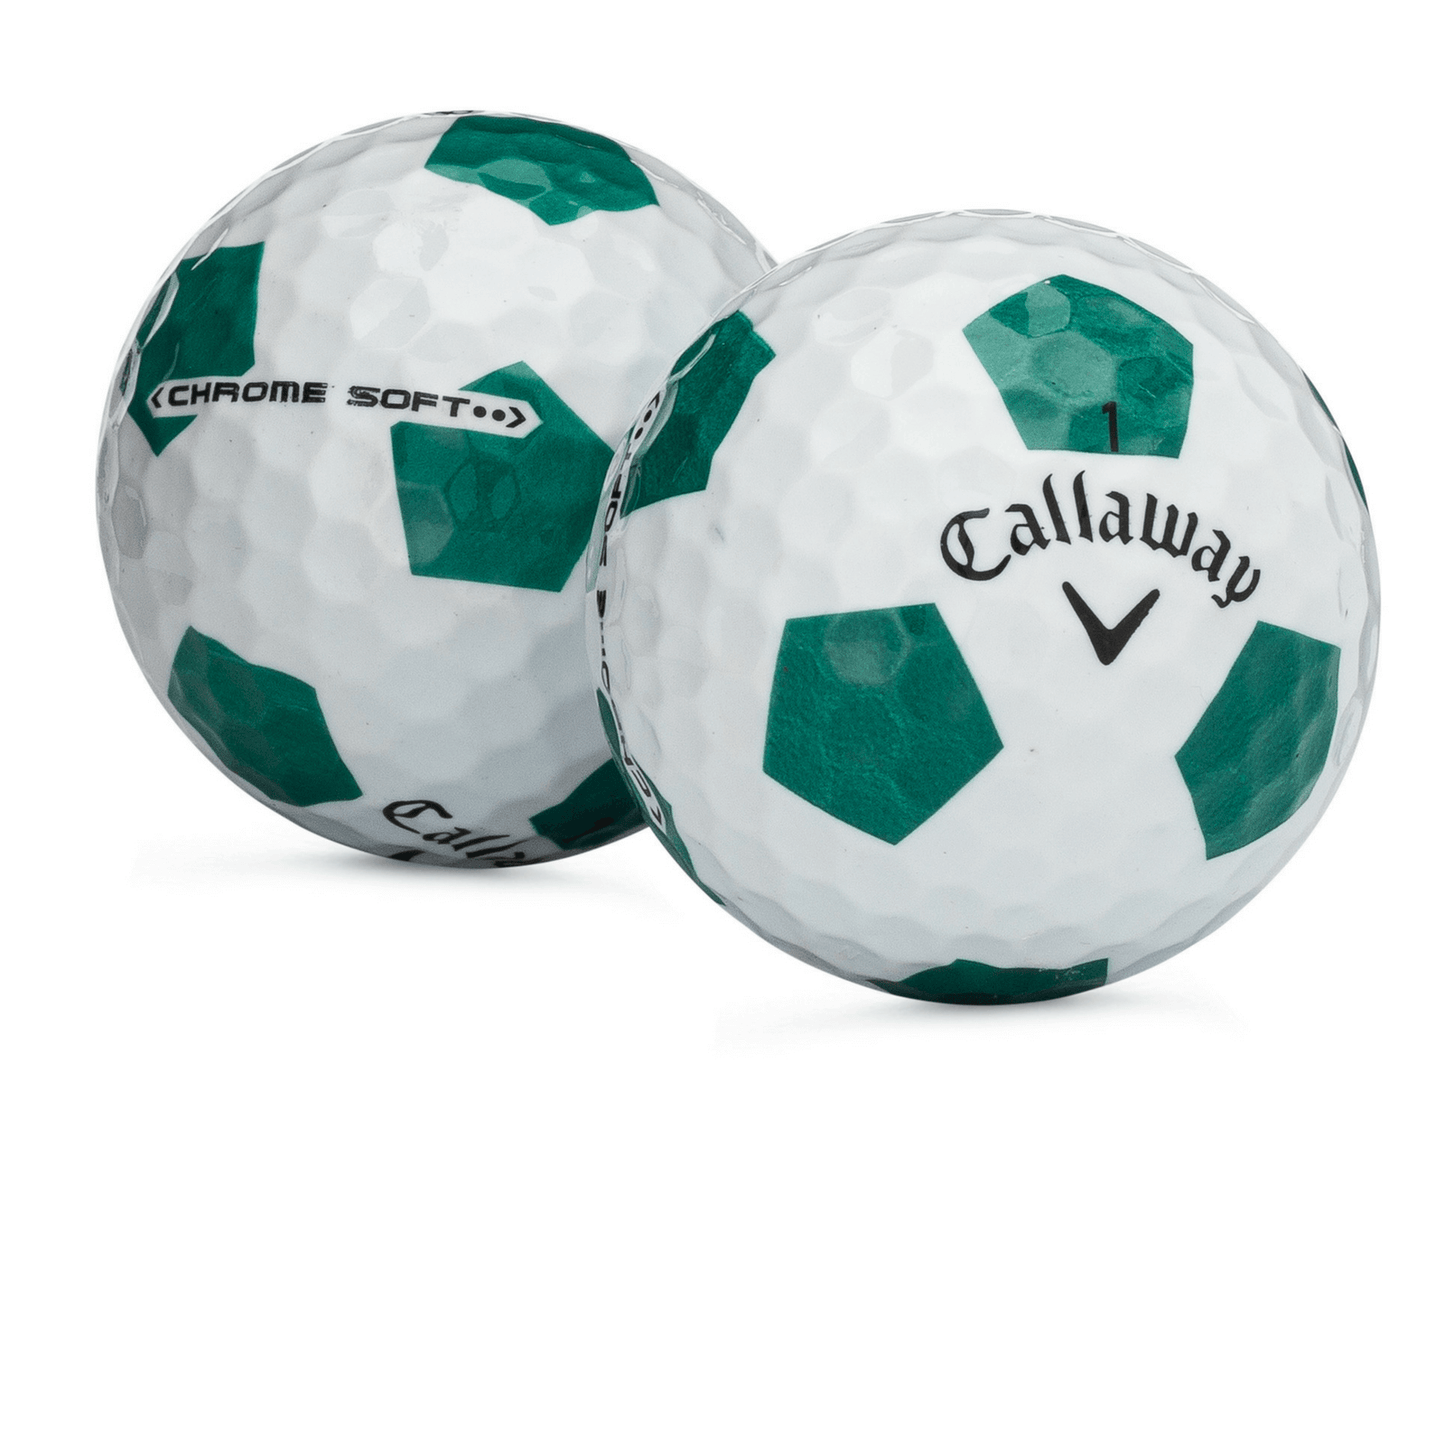 Used Callaway Chrome Soft Truvis Green Golf Balls - 1 Dozen